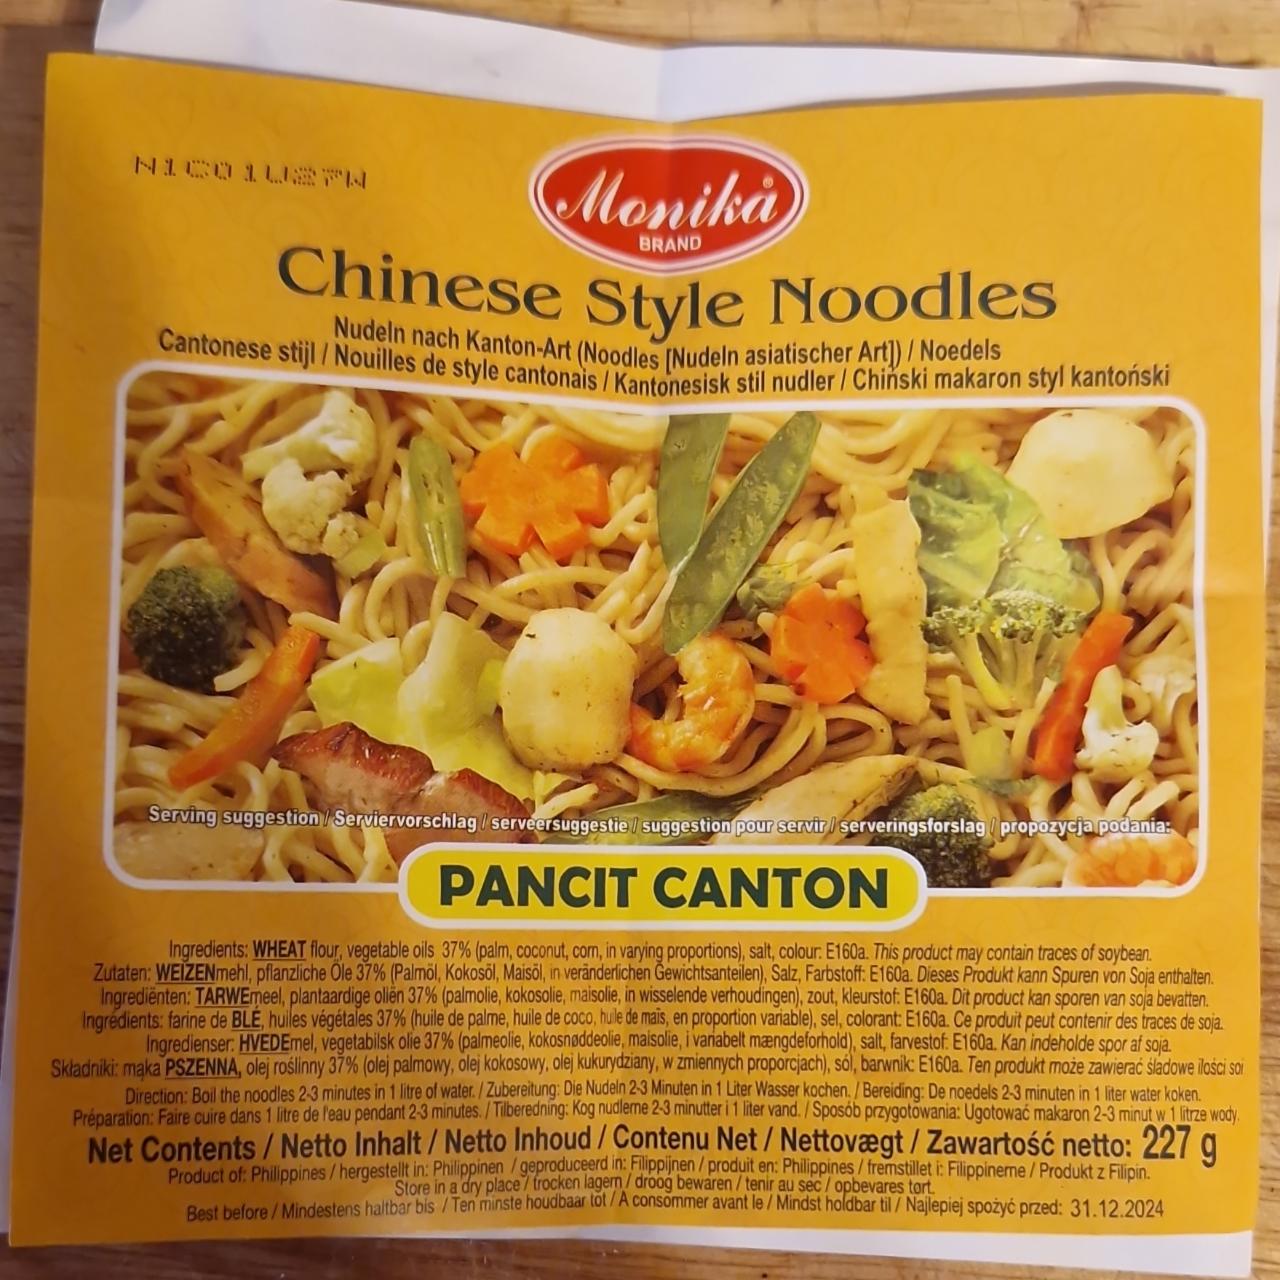 Fotografie - Chinese Style Noodles Monika brand